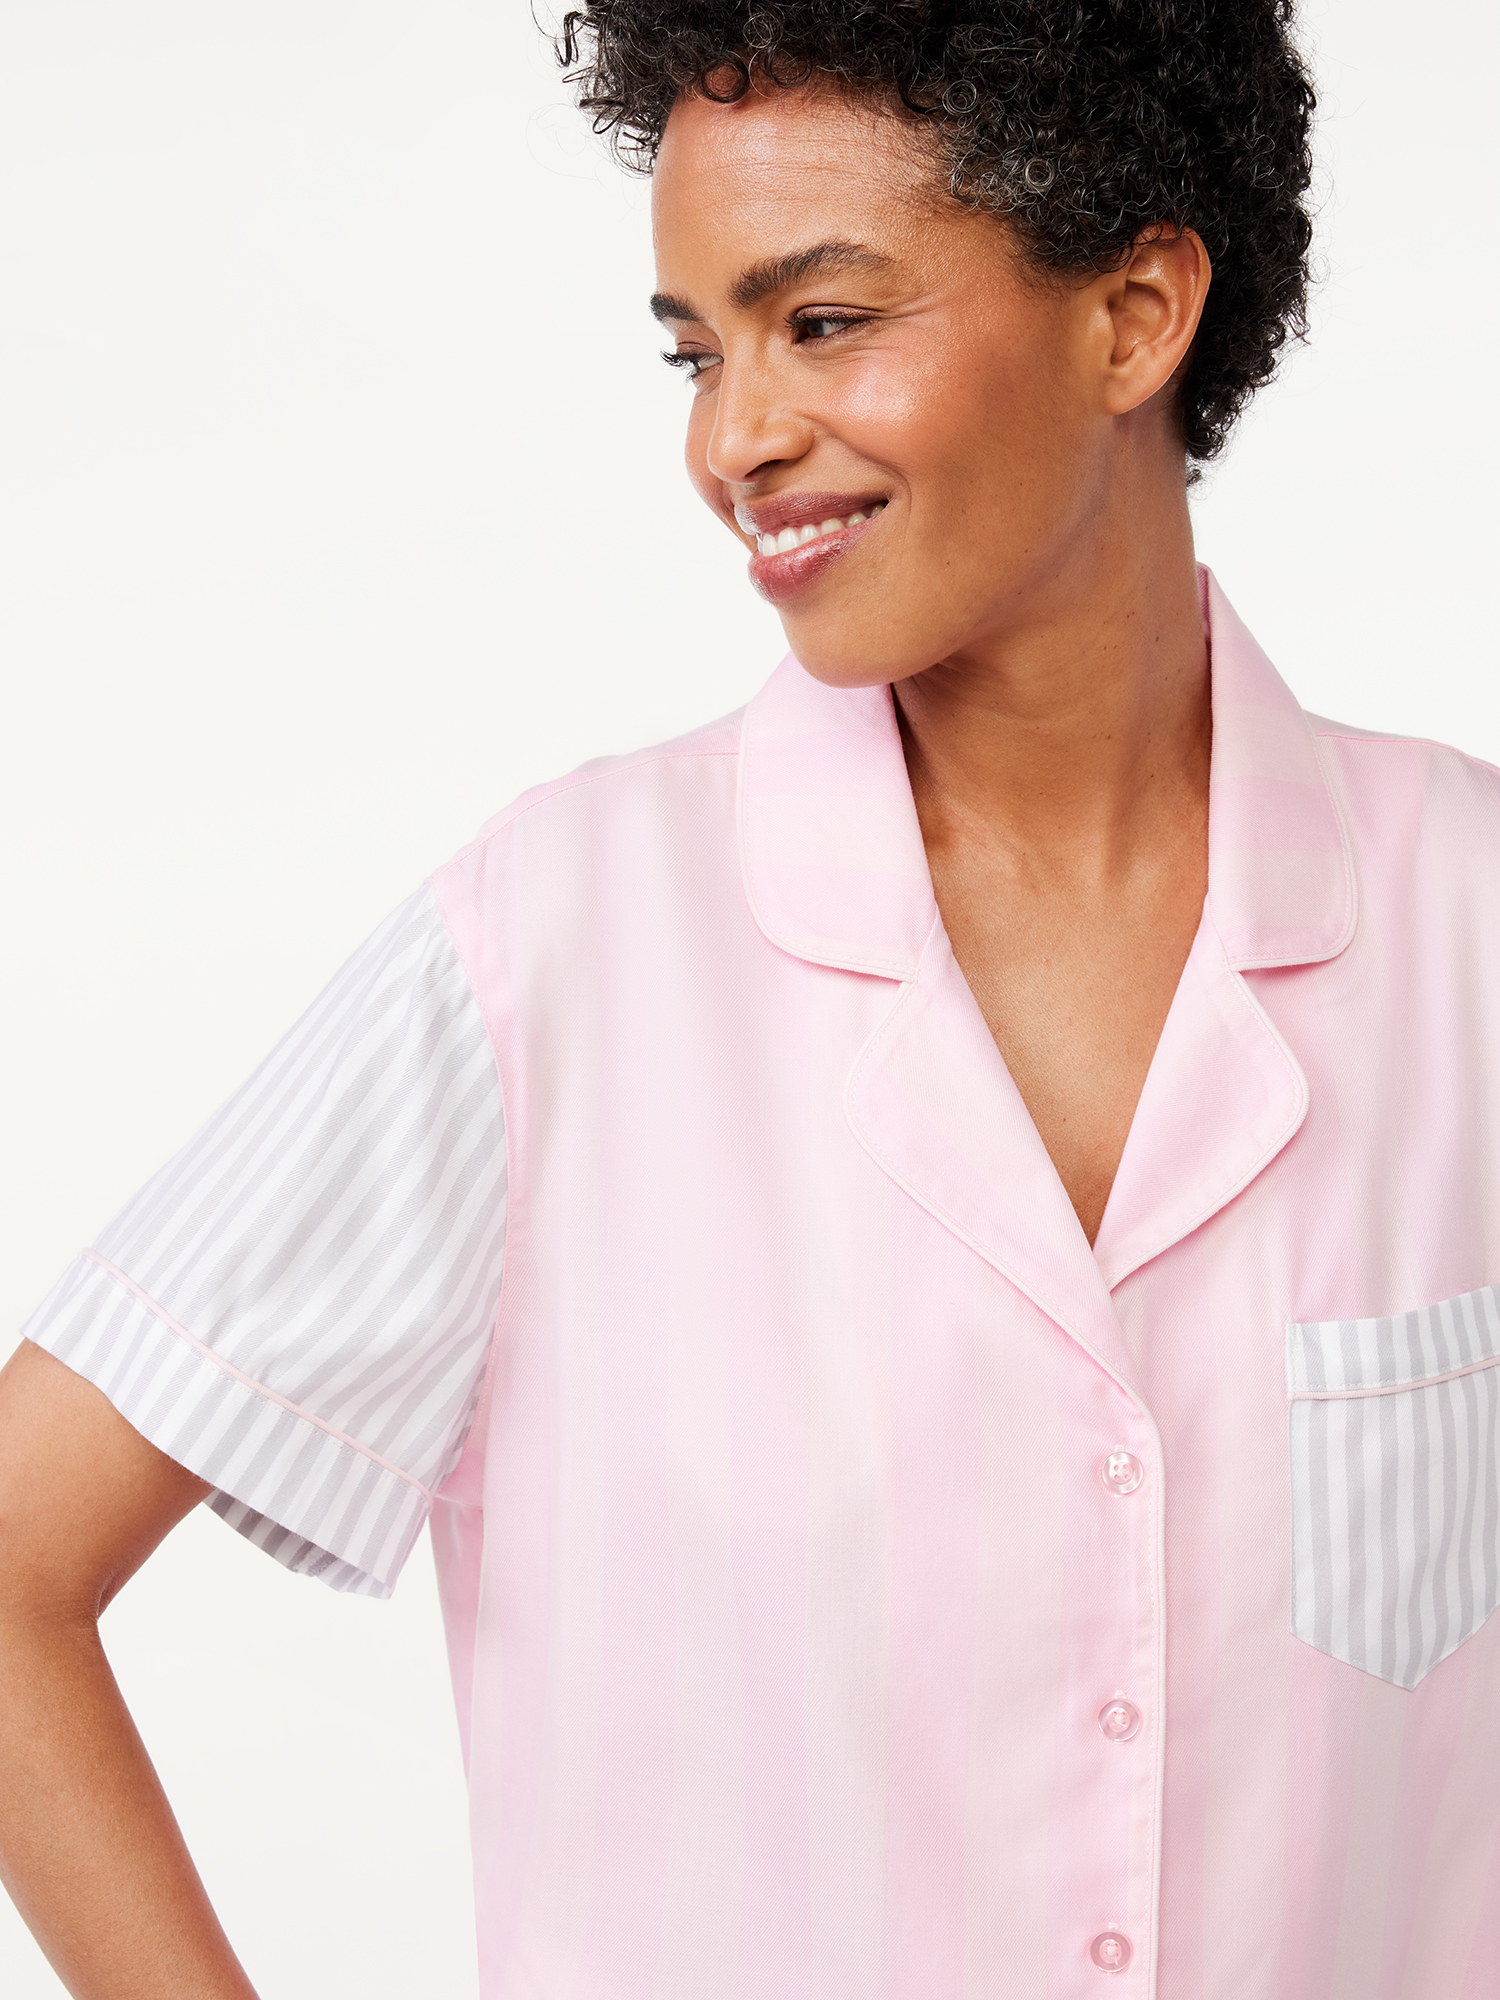 Joyspun Women's Woven Notch Collar Pajama Top, Sizes S to 3X - image 4 of 5